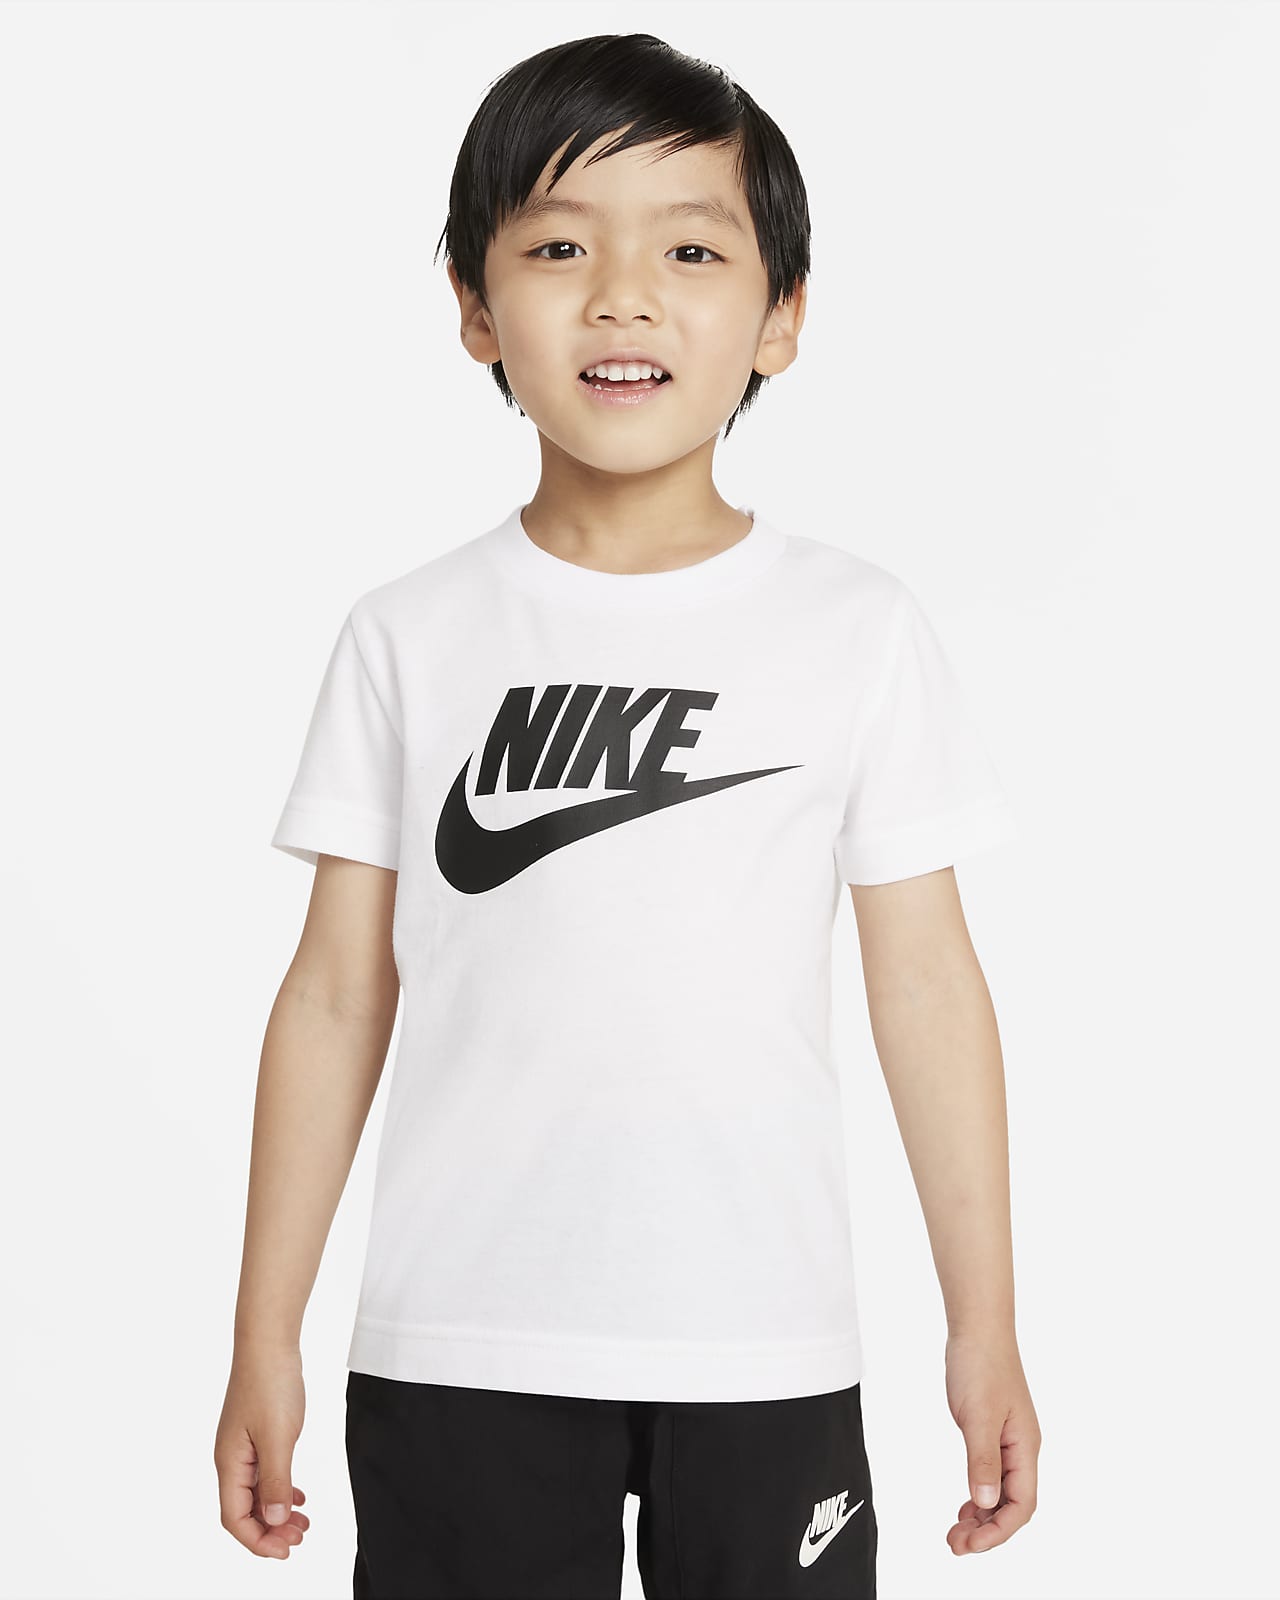 Tričko Nike pro batolata